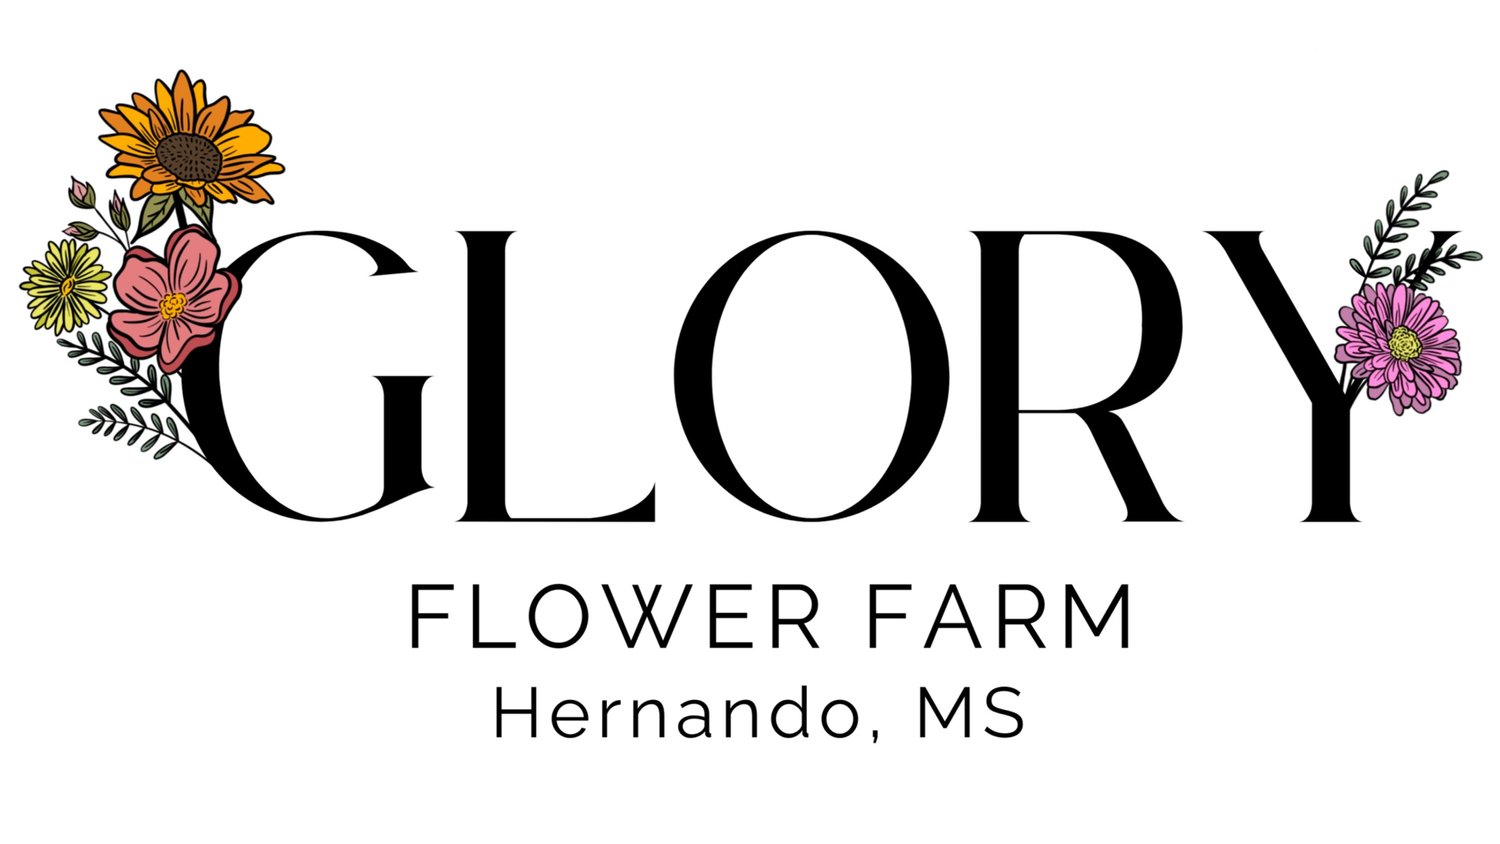 Glory Flower Farm- Hernando, MS Flower Farm